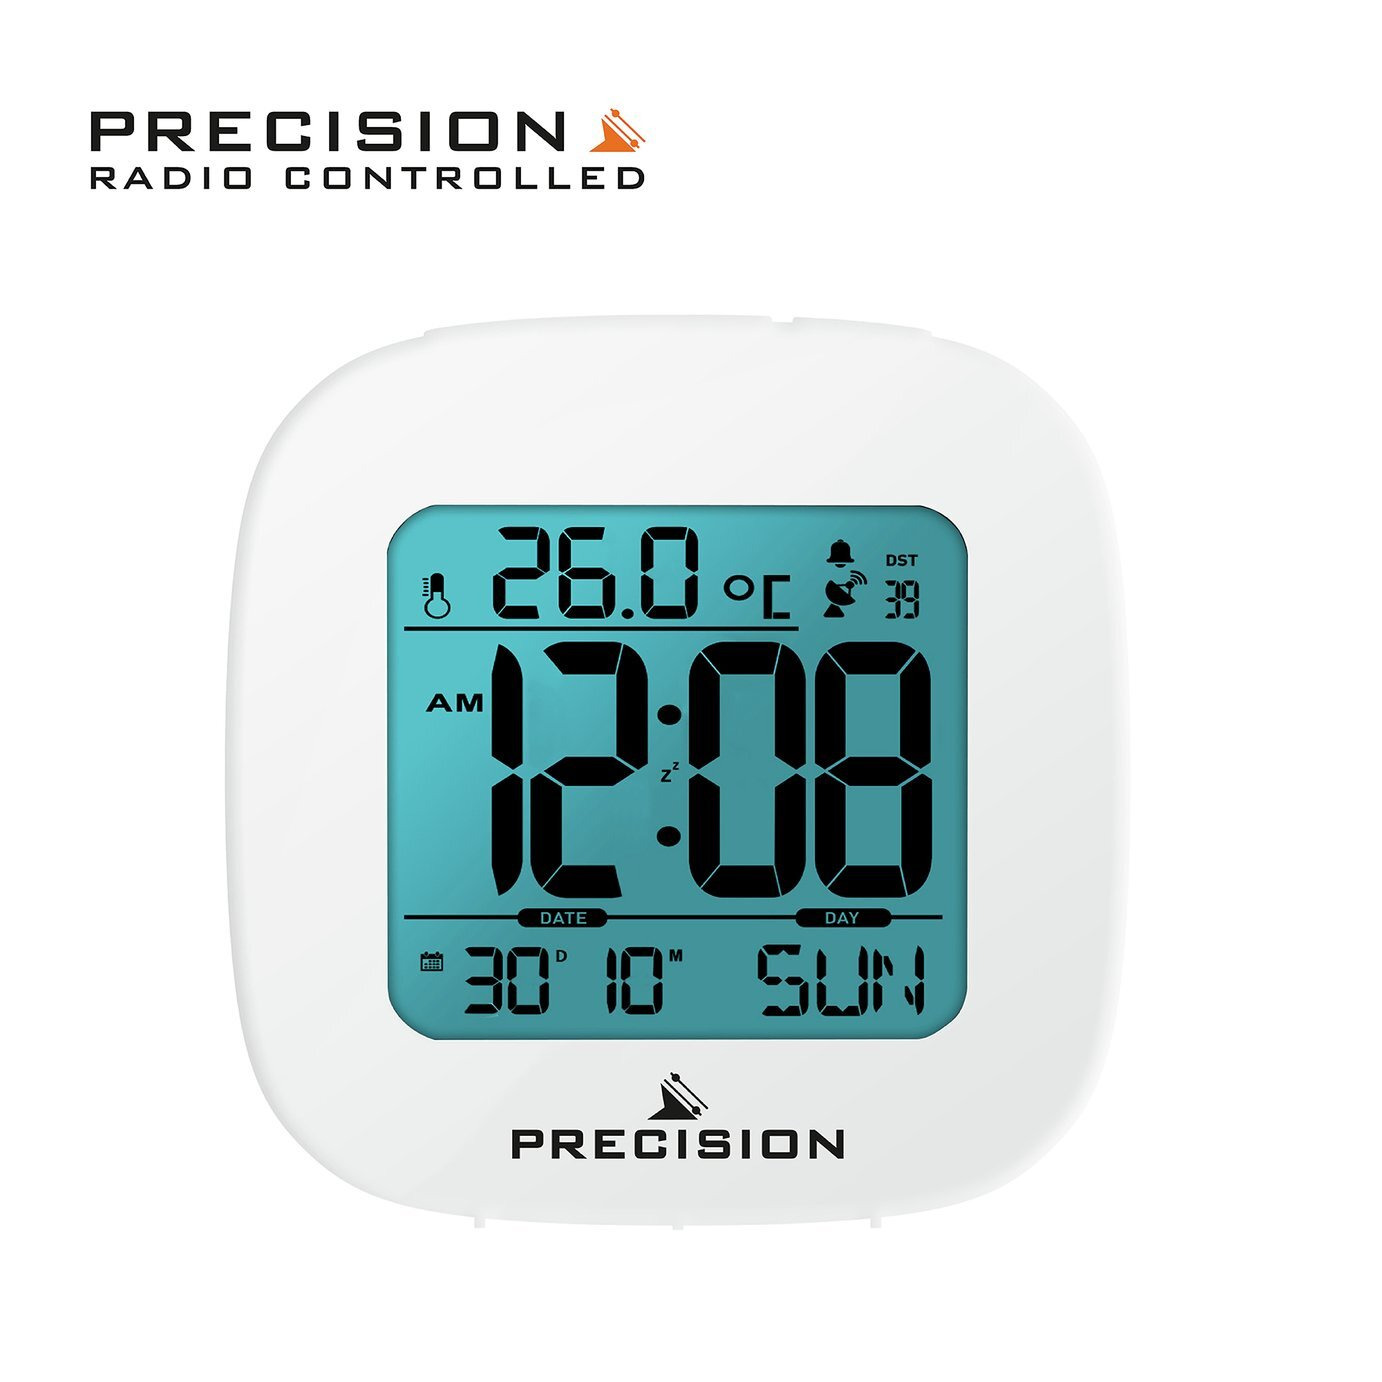 Precision Radio Controlled Digital Alarm Clock - White - image 1